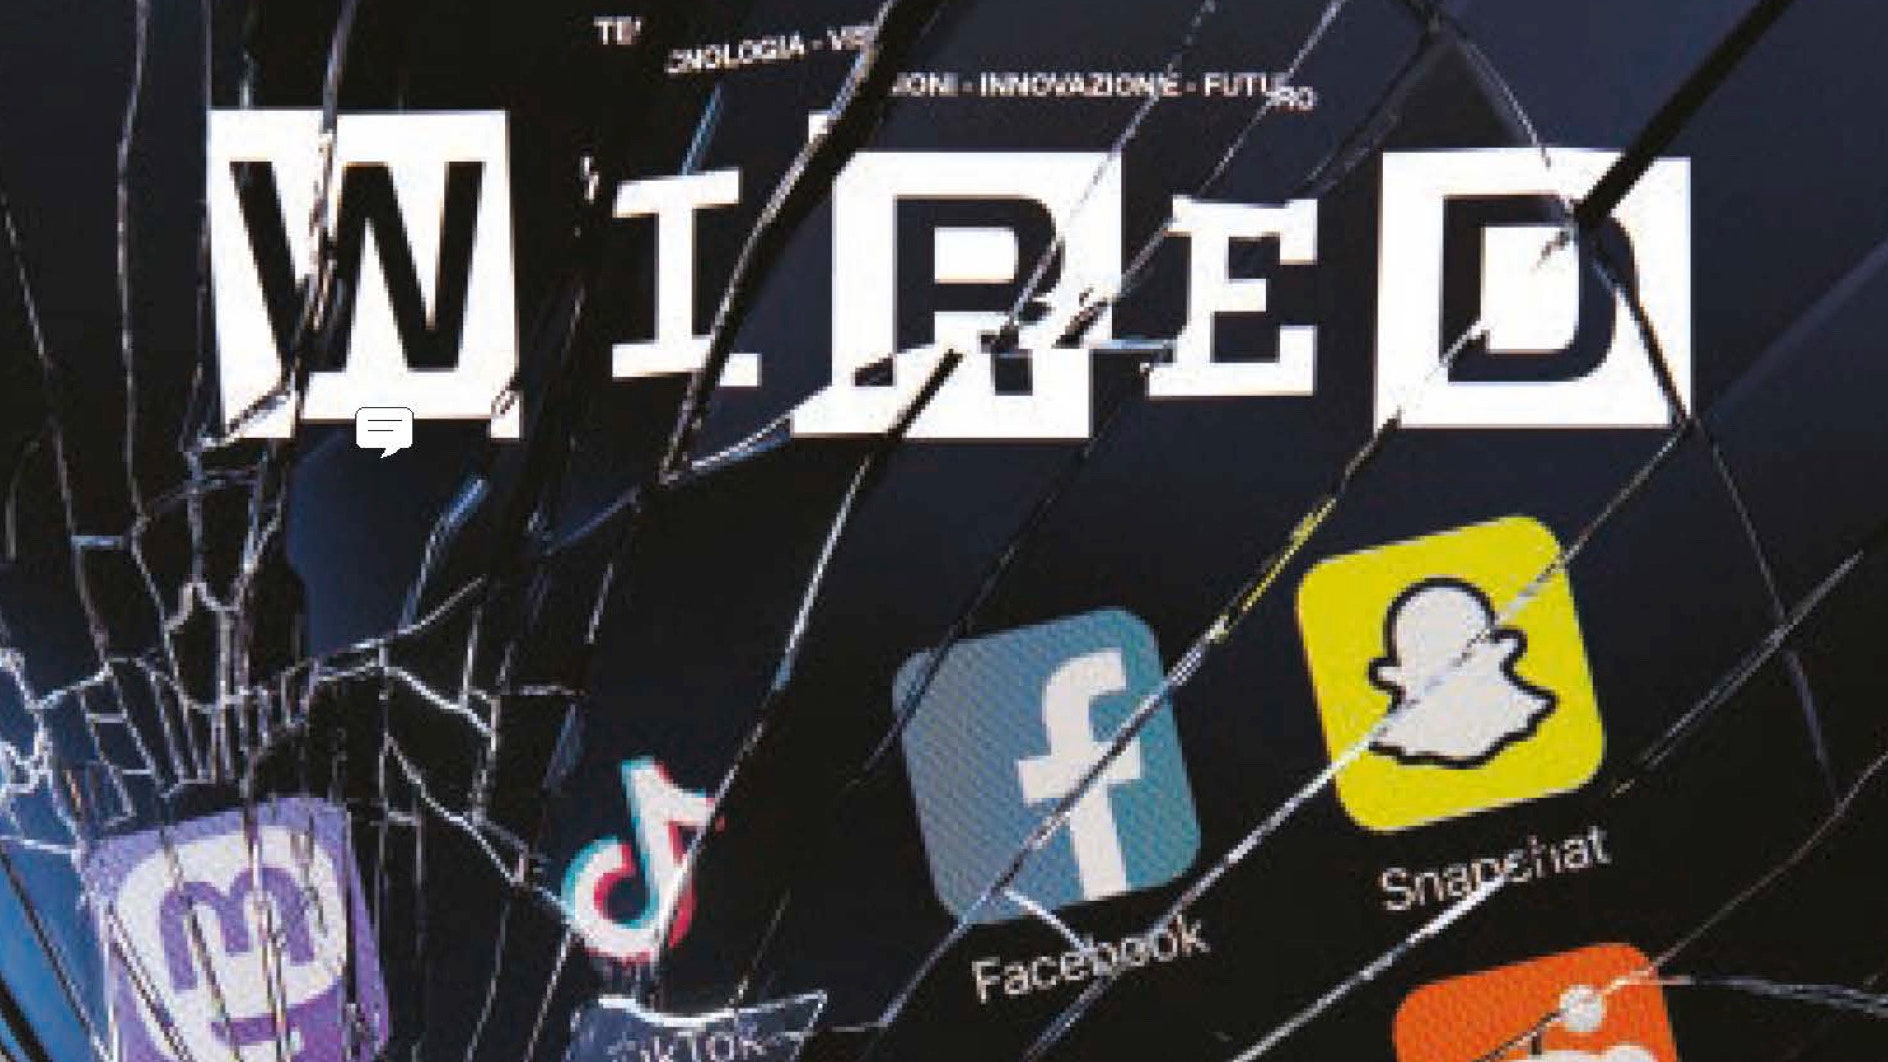 Wired in edicola racconta chi ha rotto i social